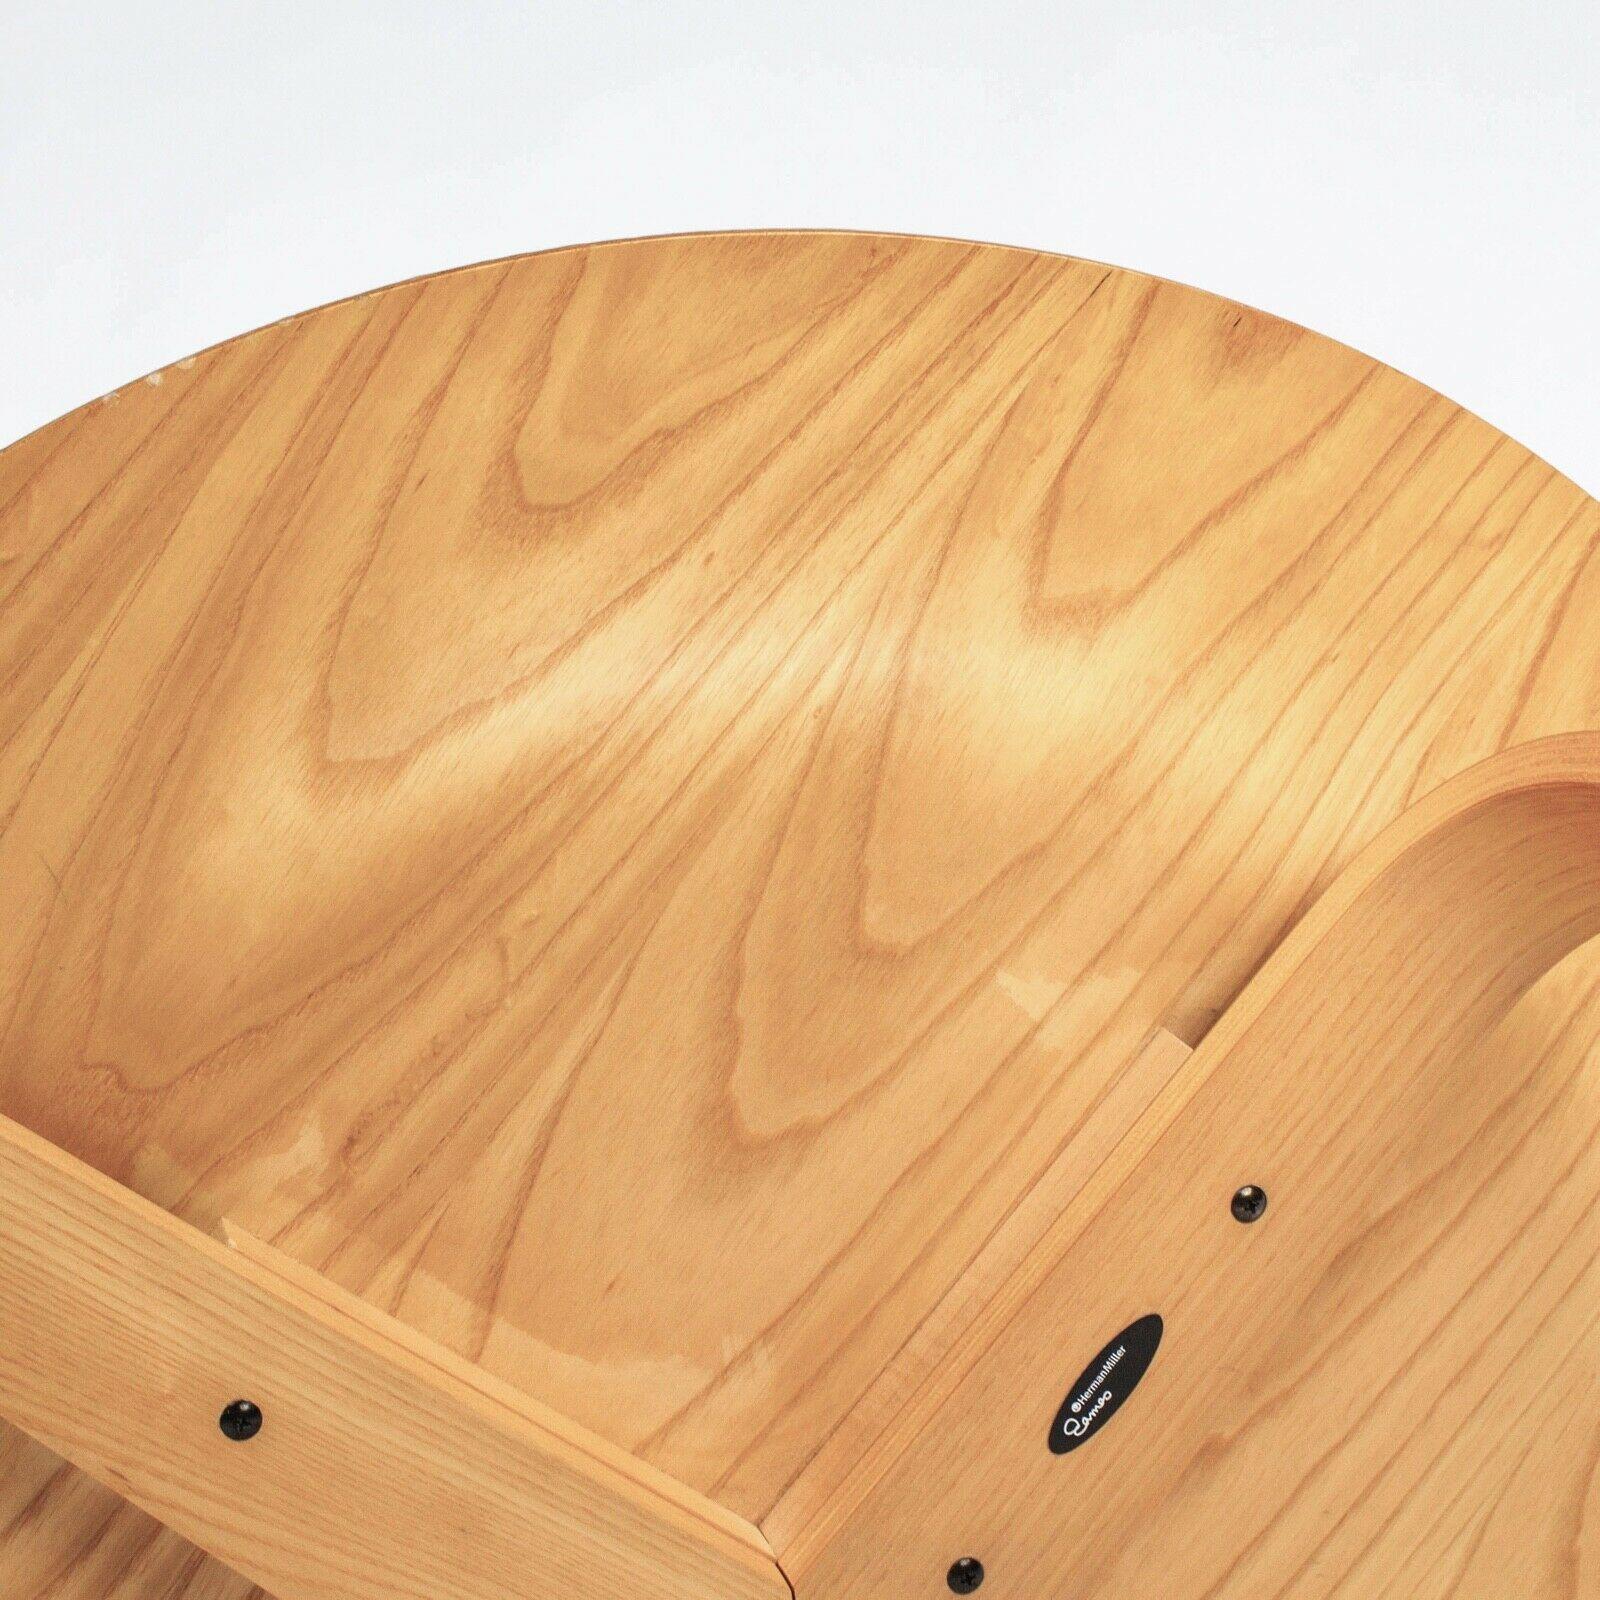 XXIe siècle et contemporain 2006 Herman Miller Ray & Charles Eames CTW Round Coffee Table Wood in White Ash (Table basse ronde en bois en frêne blanc) en vente